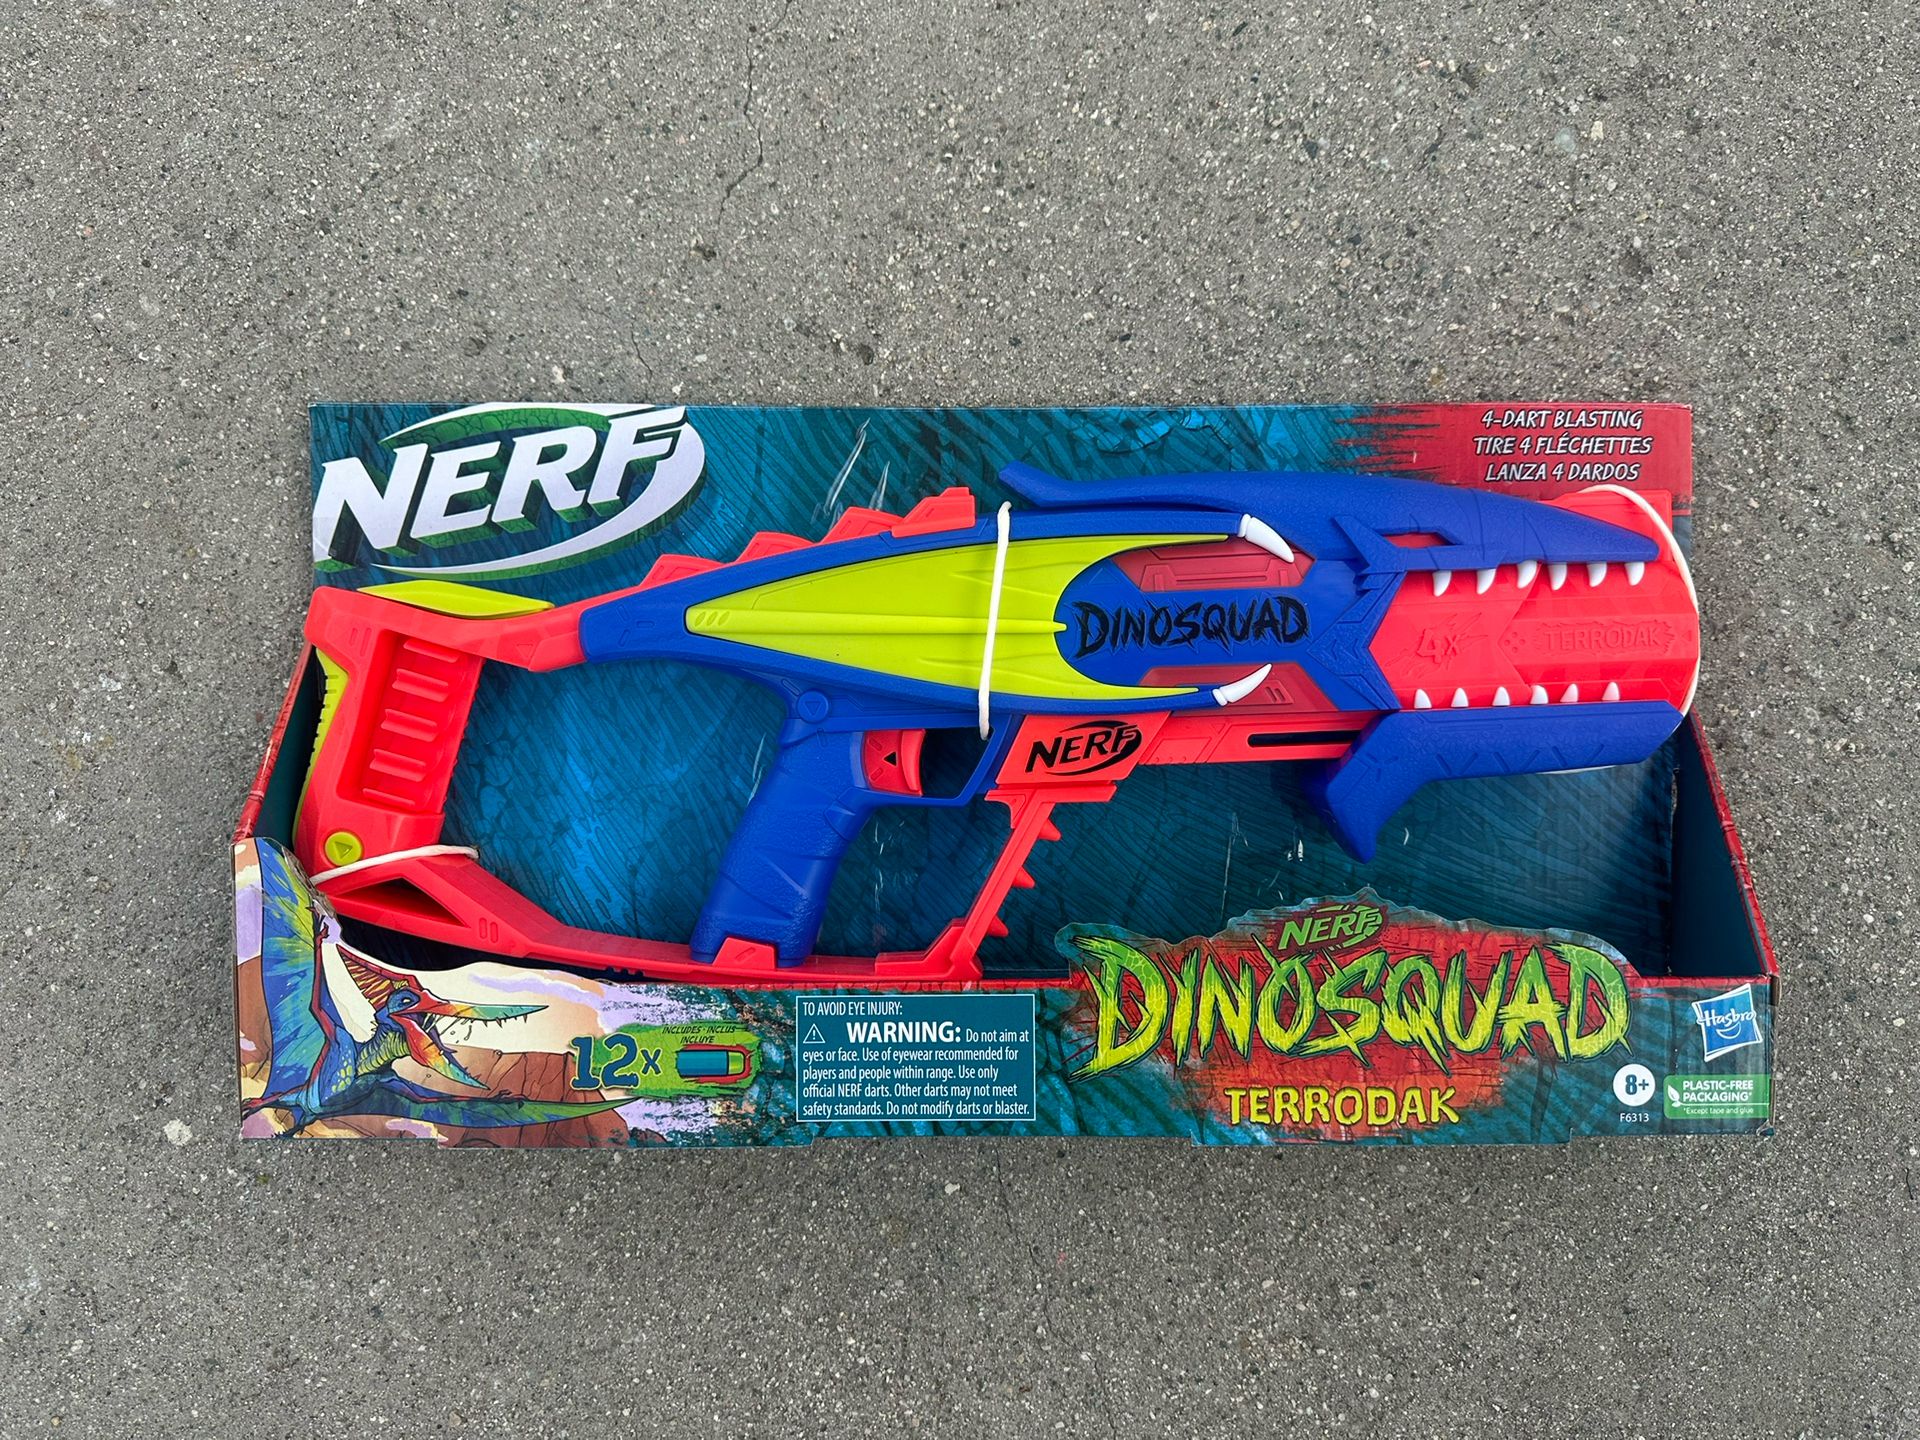 Nerf Gun Dinosaurs 